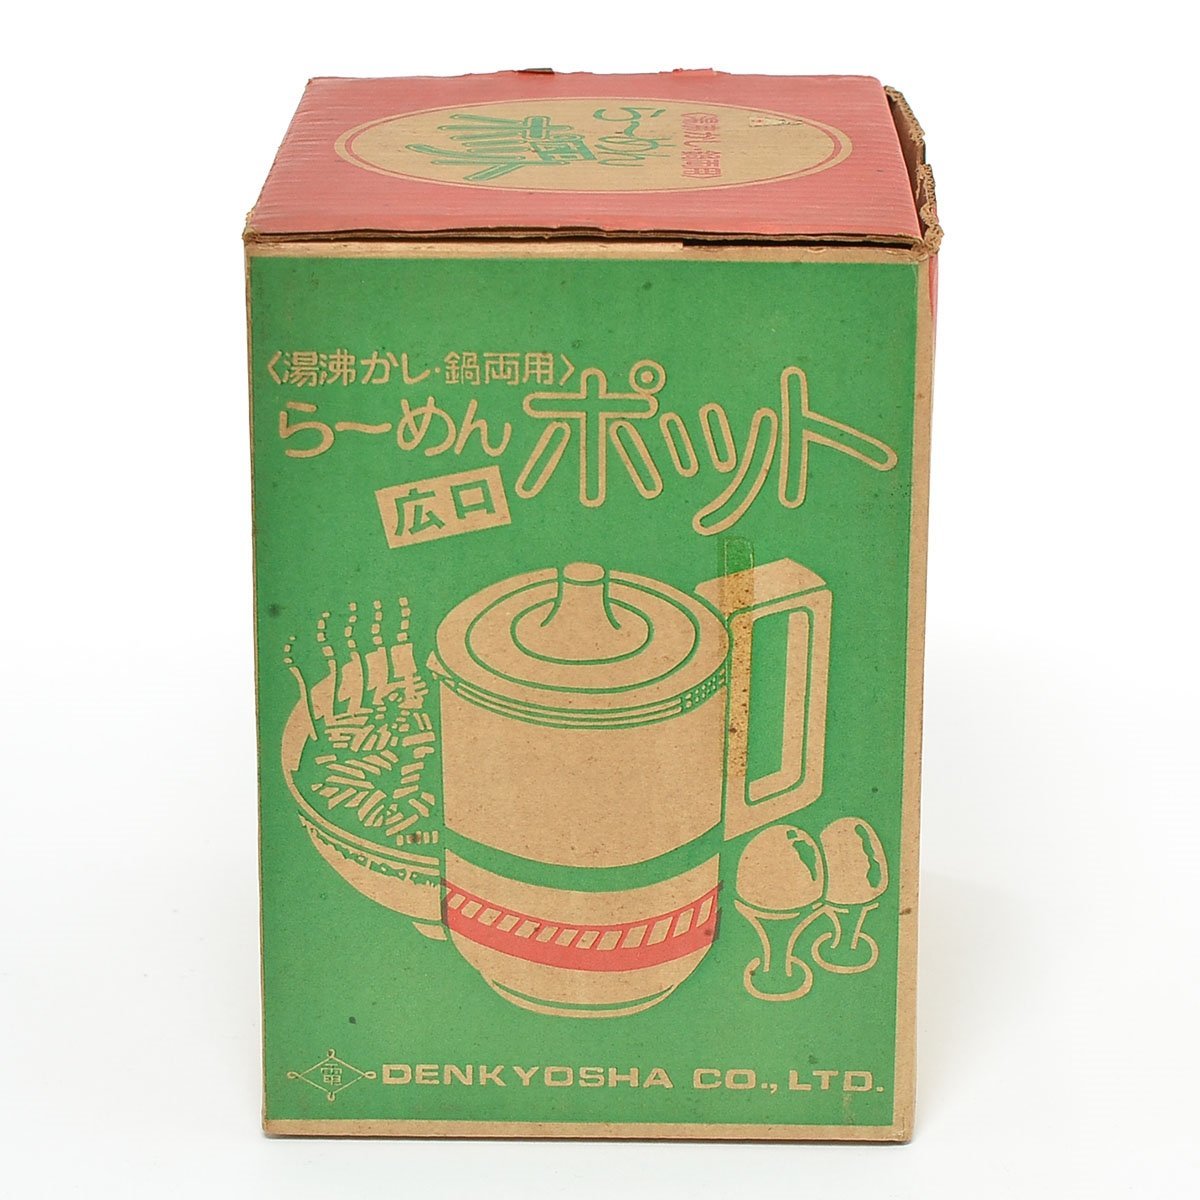 v420177 unused goods .-.. pot wide . hot water ...* saucepan both for Showa Retro DENKYOSHA